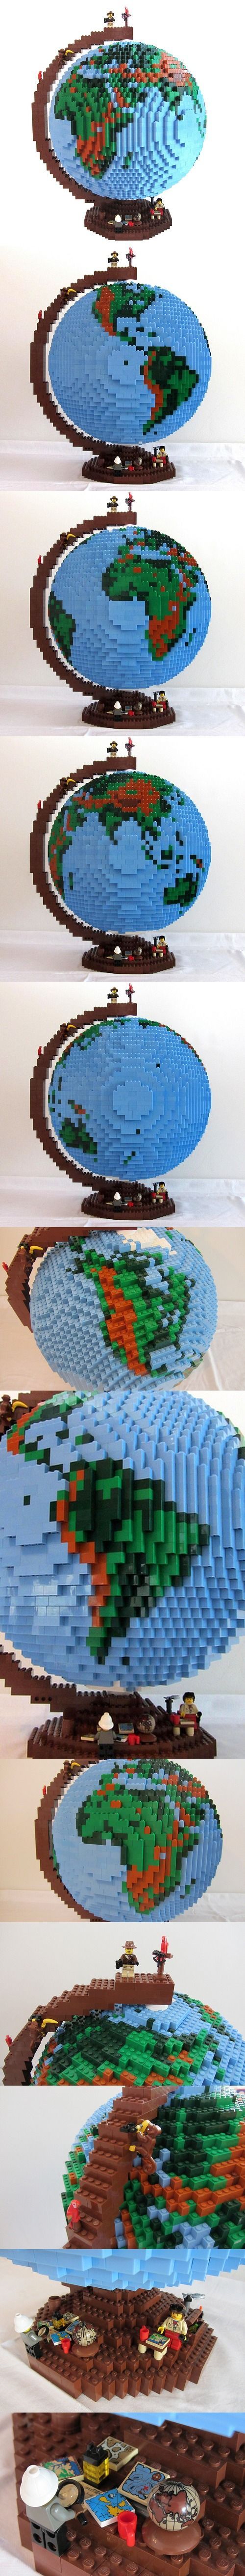 Lego globe - Lego, the globe, Longpost